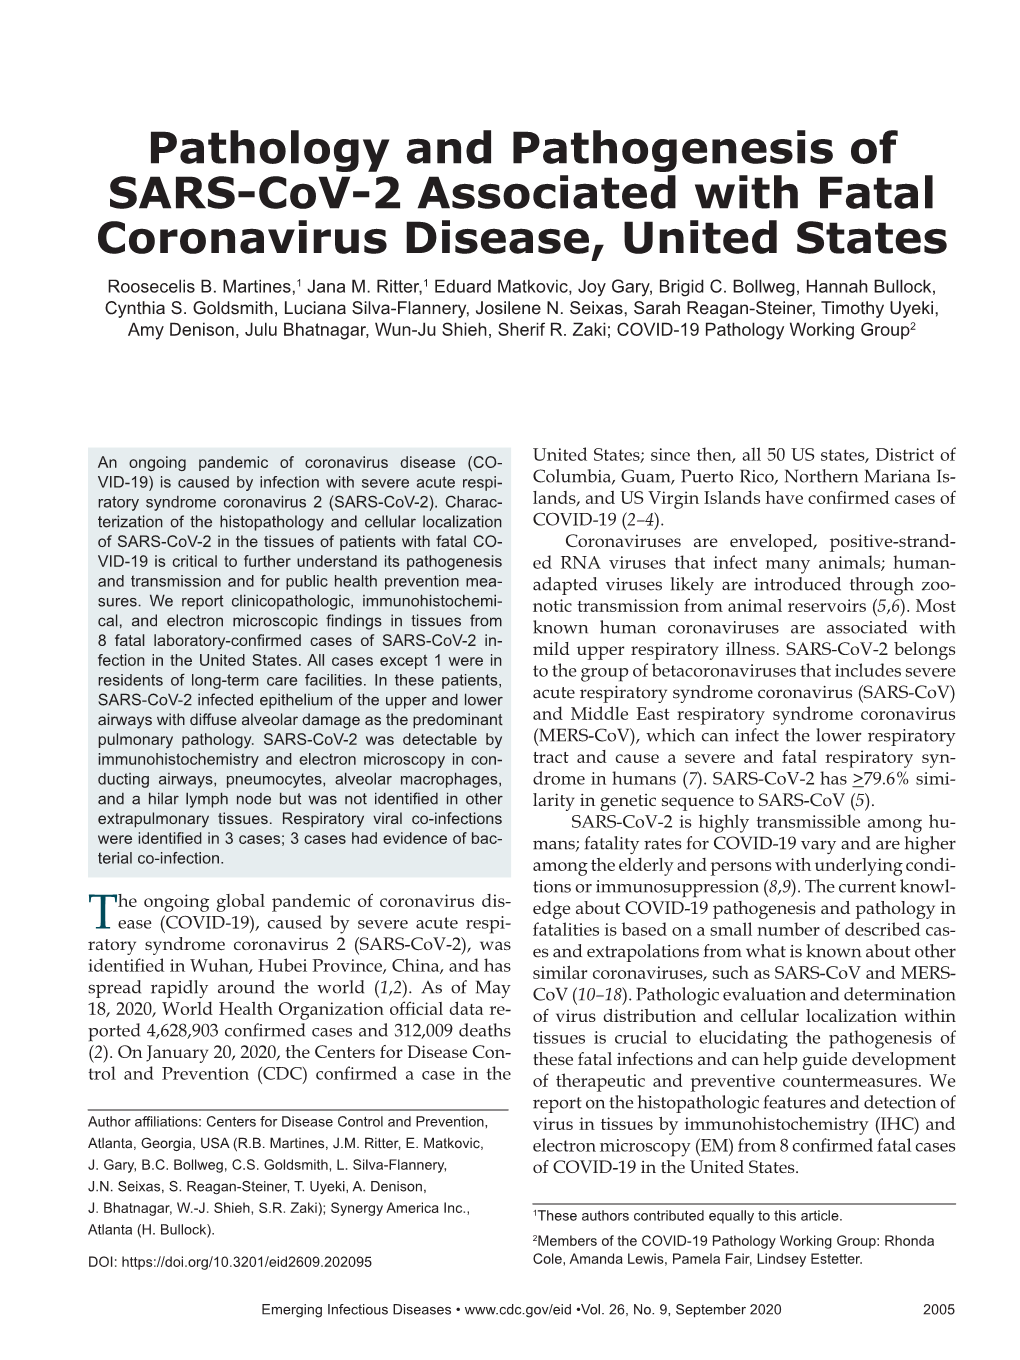 Pathology and Pathogenesis of SARS-Cov-2 Associated with Fatal Coronavirus Disease, United States Roosecelis B